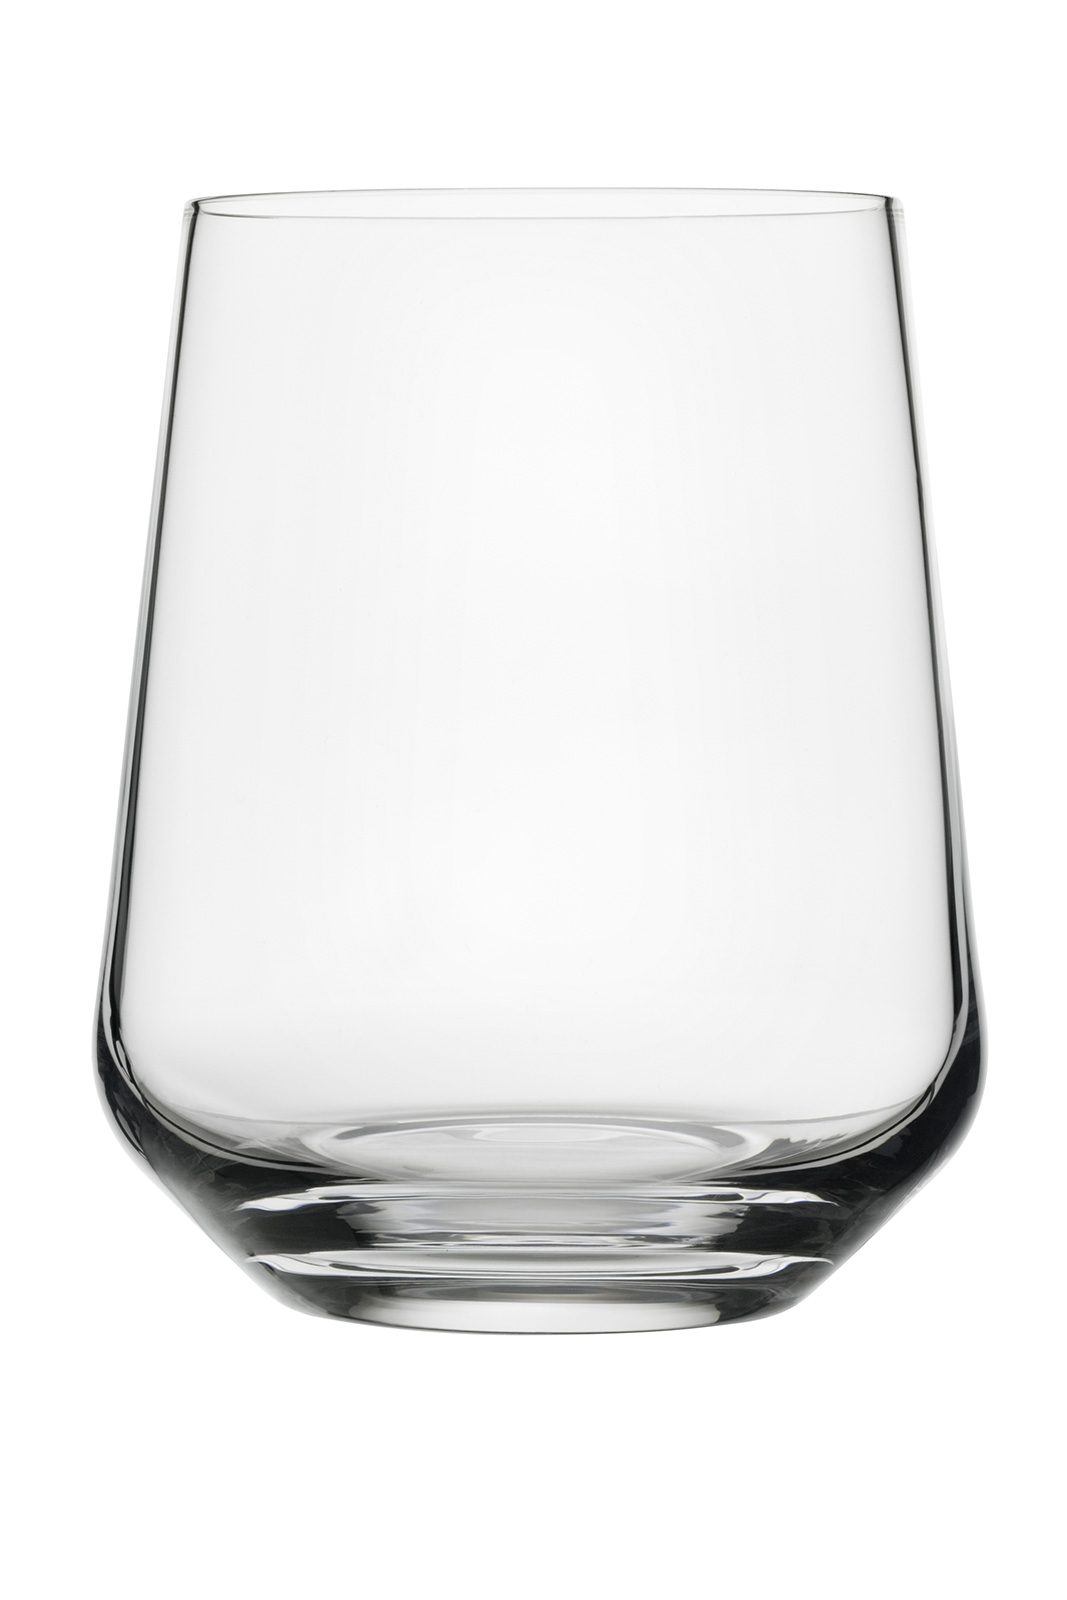 iittala Essence Wasserglas 0,35ltr.